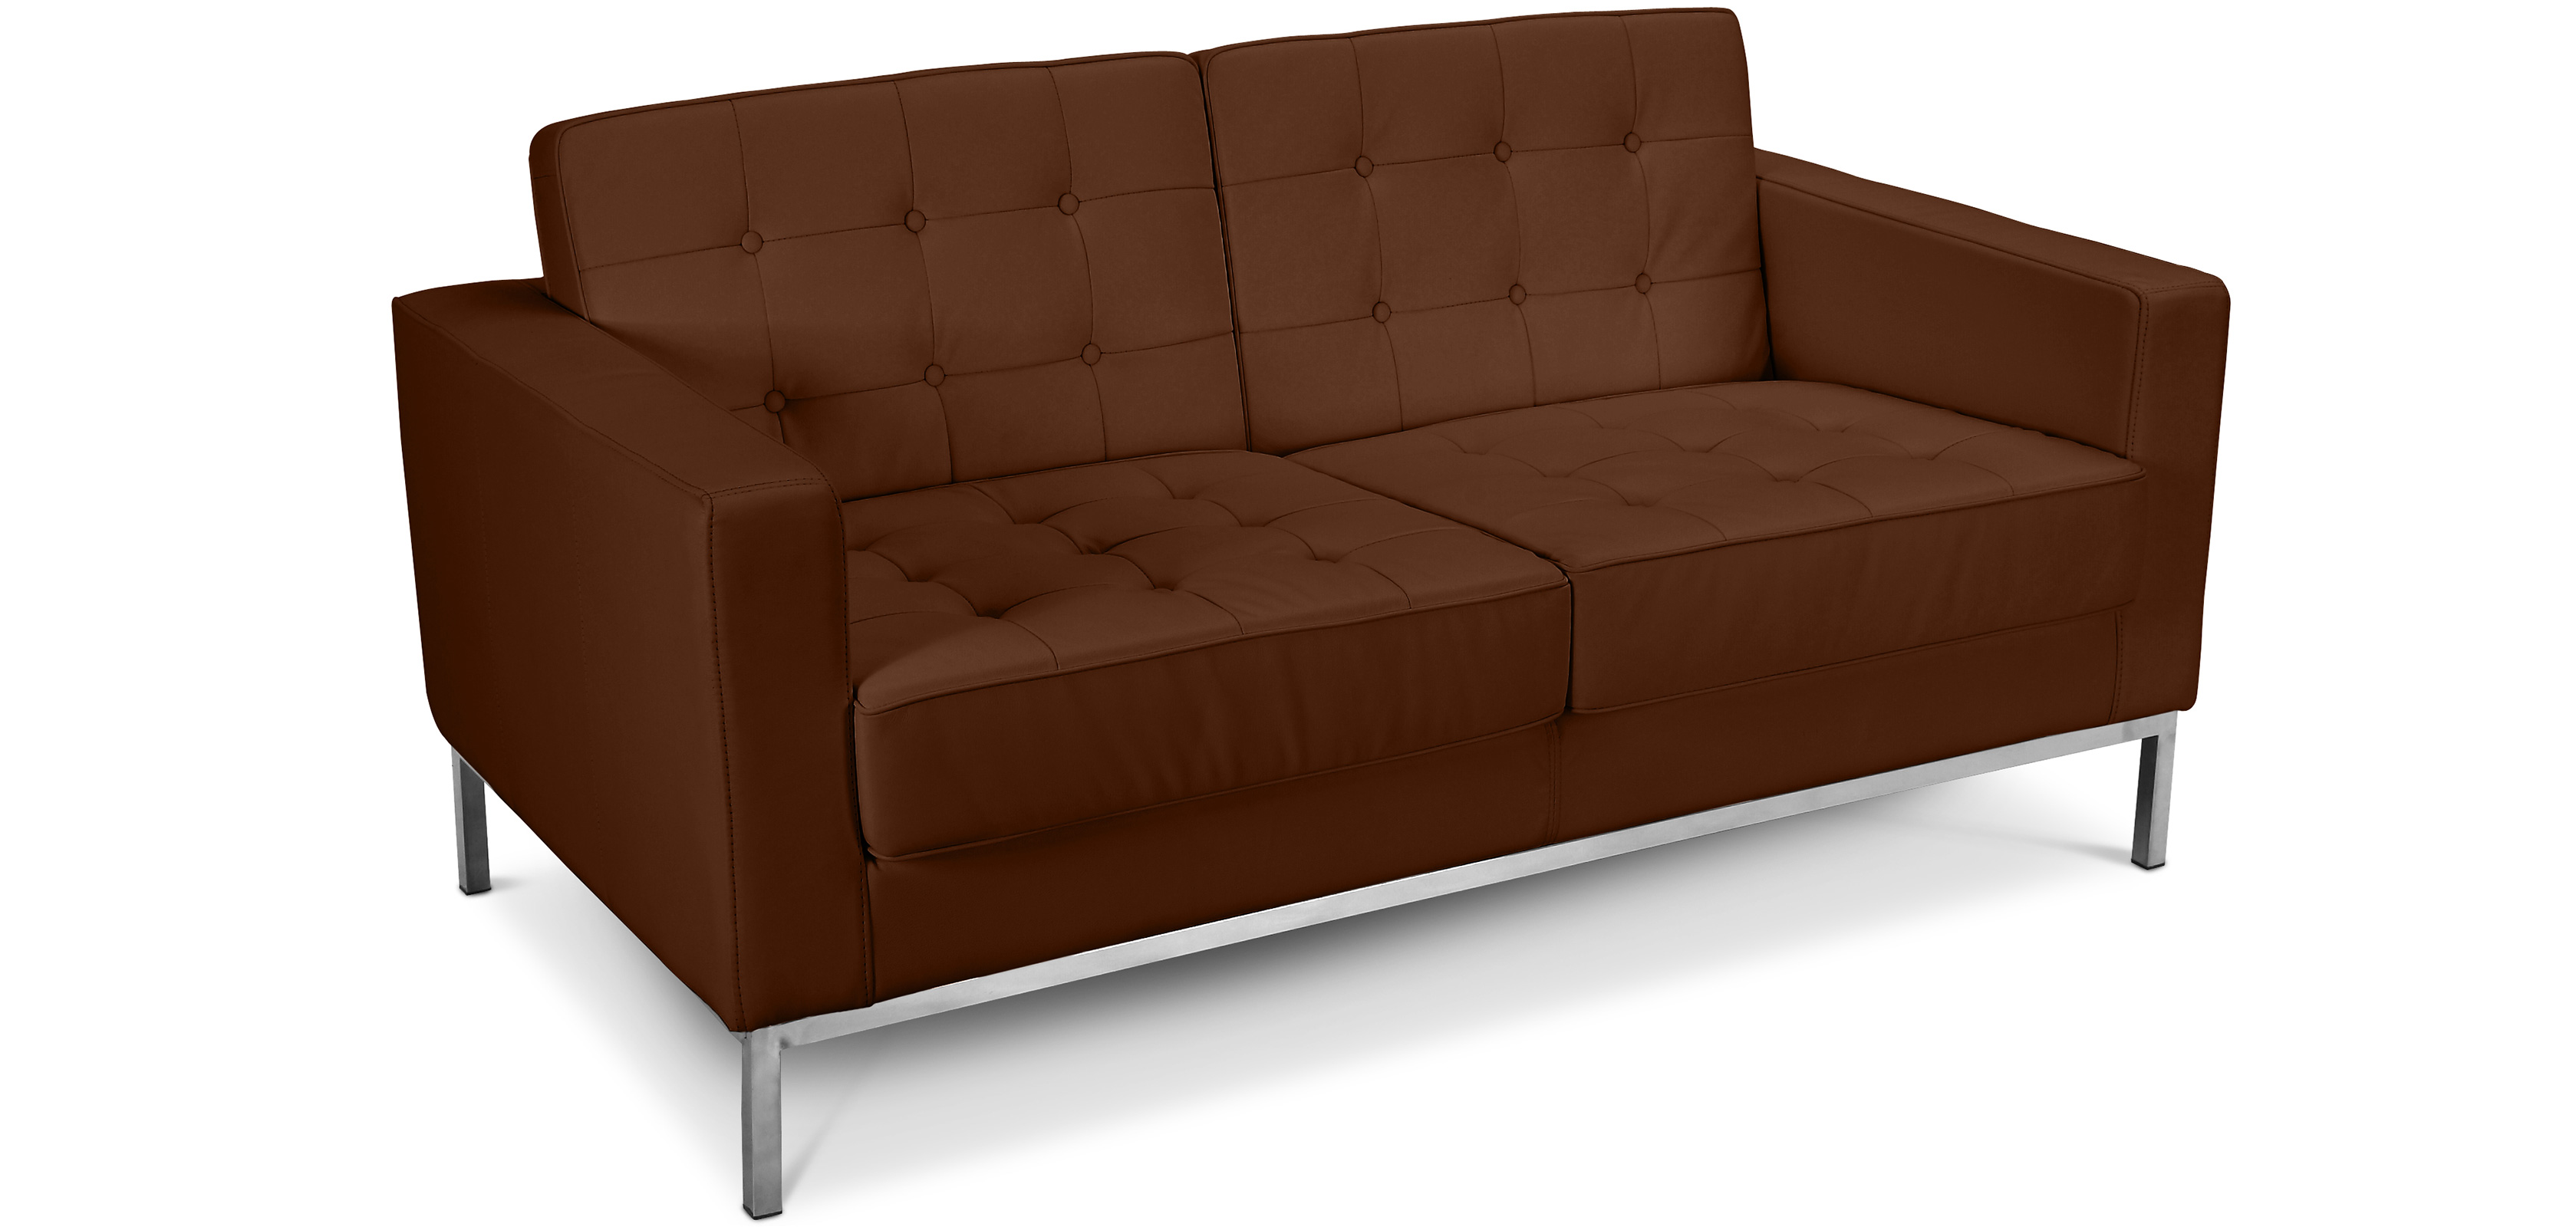 knoll style leather sofa